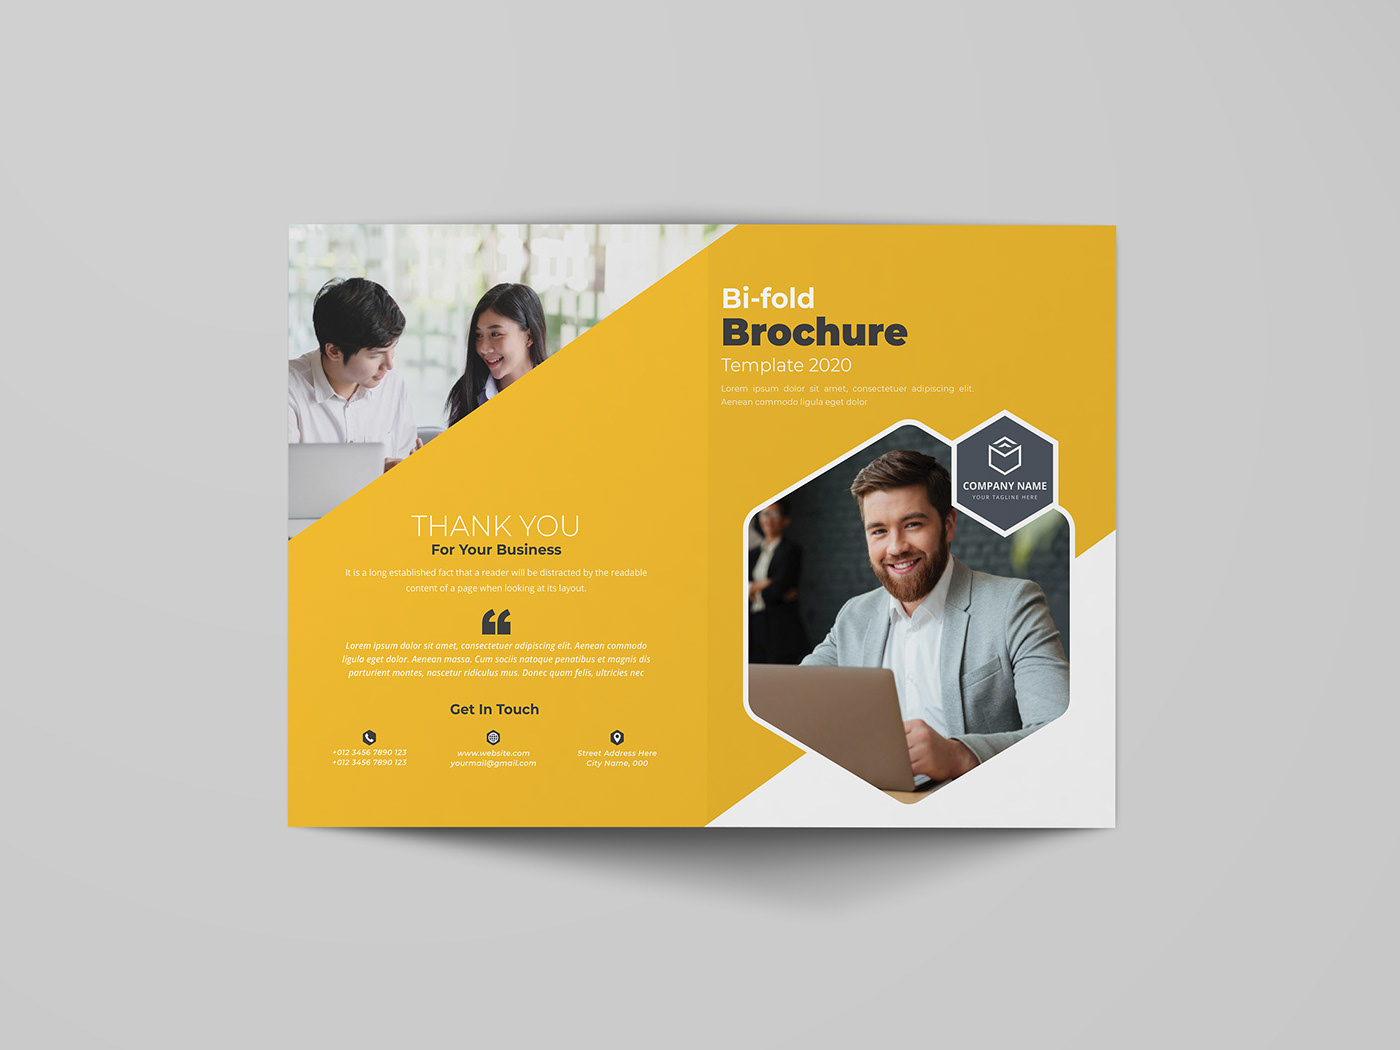 Bi-fold Brochure Design Template  Freebie  on Behance Intended For Illustrator Brochure Templates Free Download